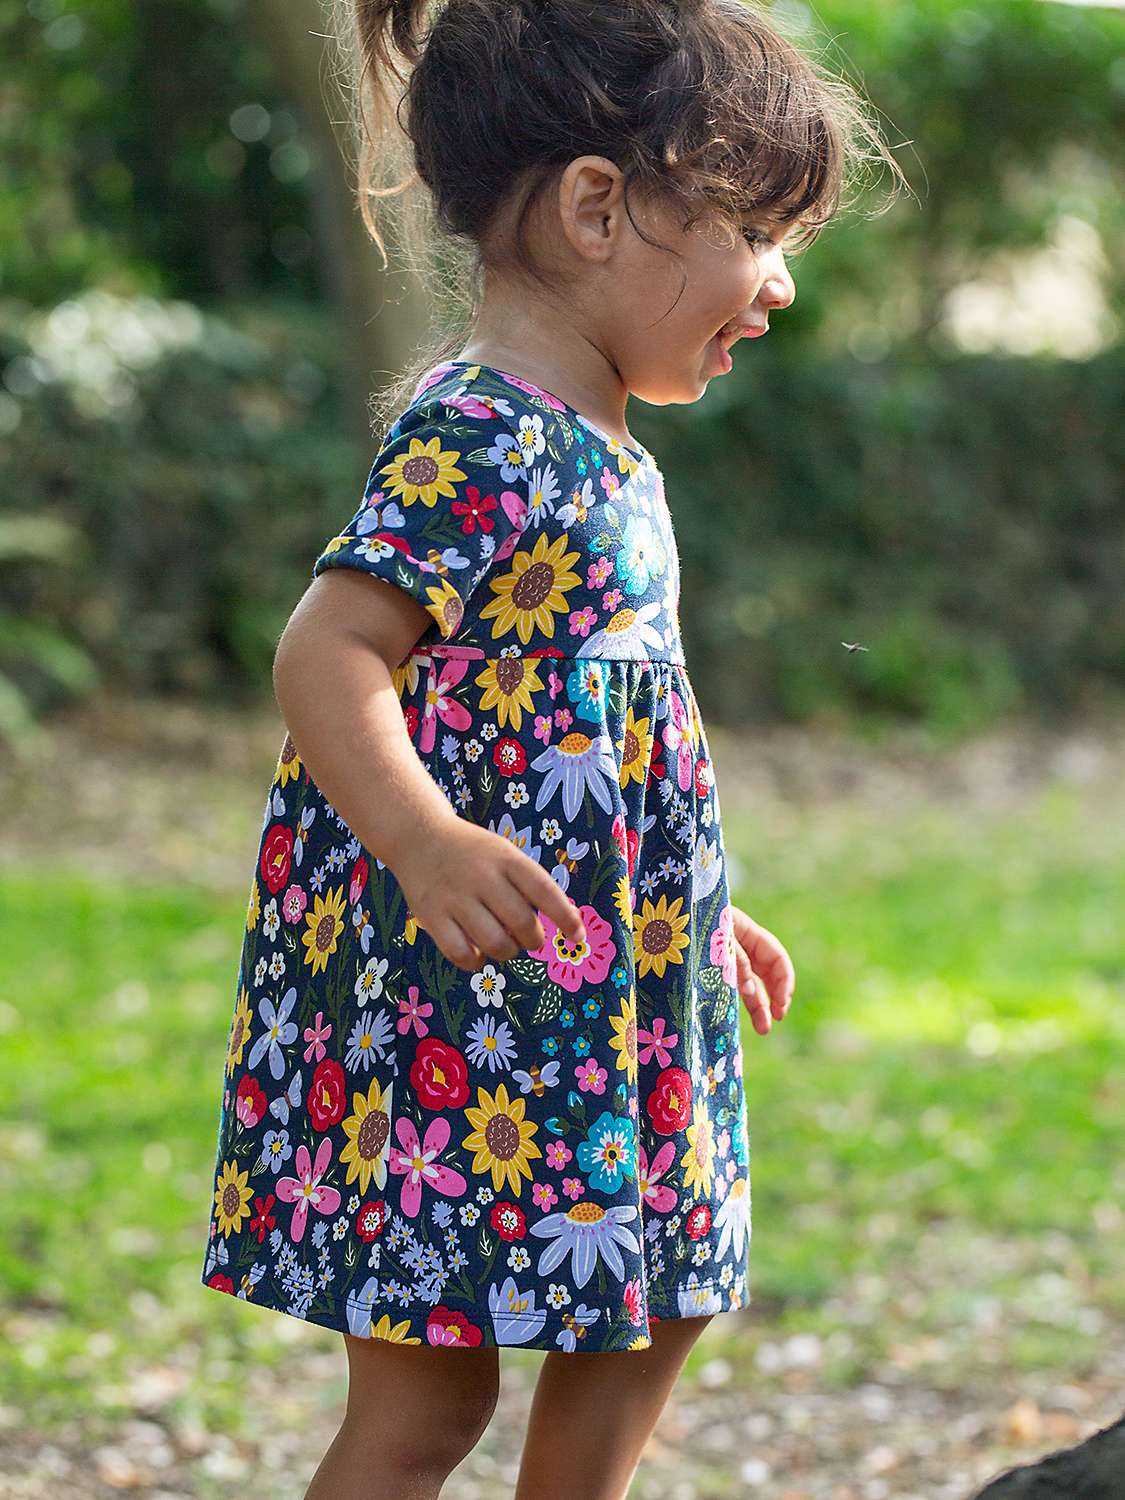 Buy Frugi Baby Tallie Organic Cotton Floral Print Dress, Indigo Pollinators Online at johnlewis.com